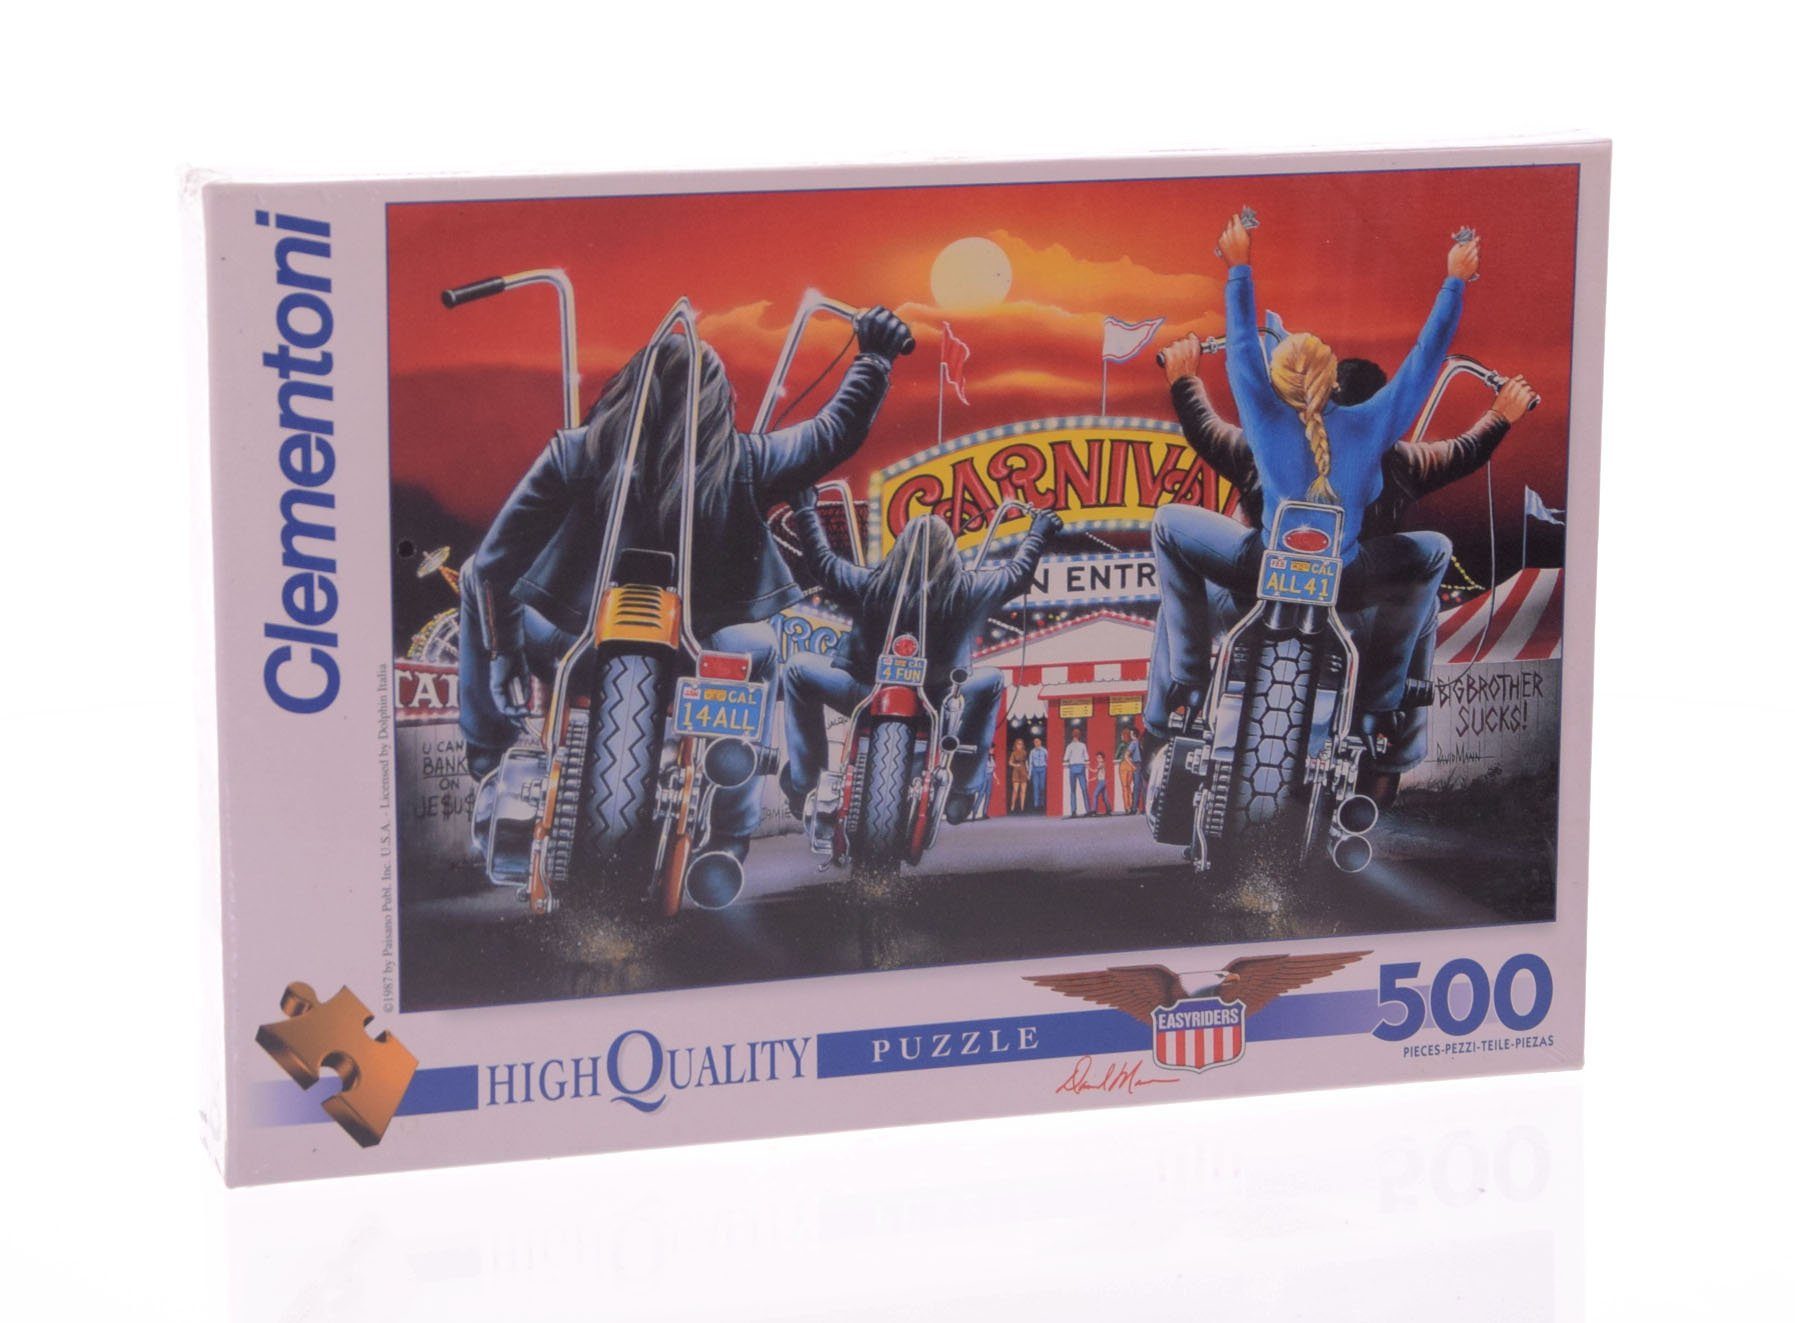 Clementoni® Puzzle Clementoni High Quality Collection Puzzle "HD Carnival" 500 Teile, 500 Puzzleteile